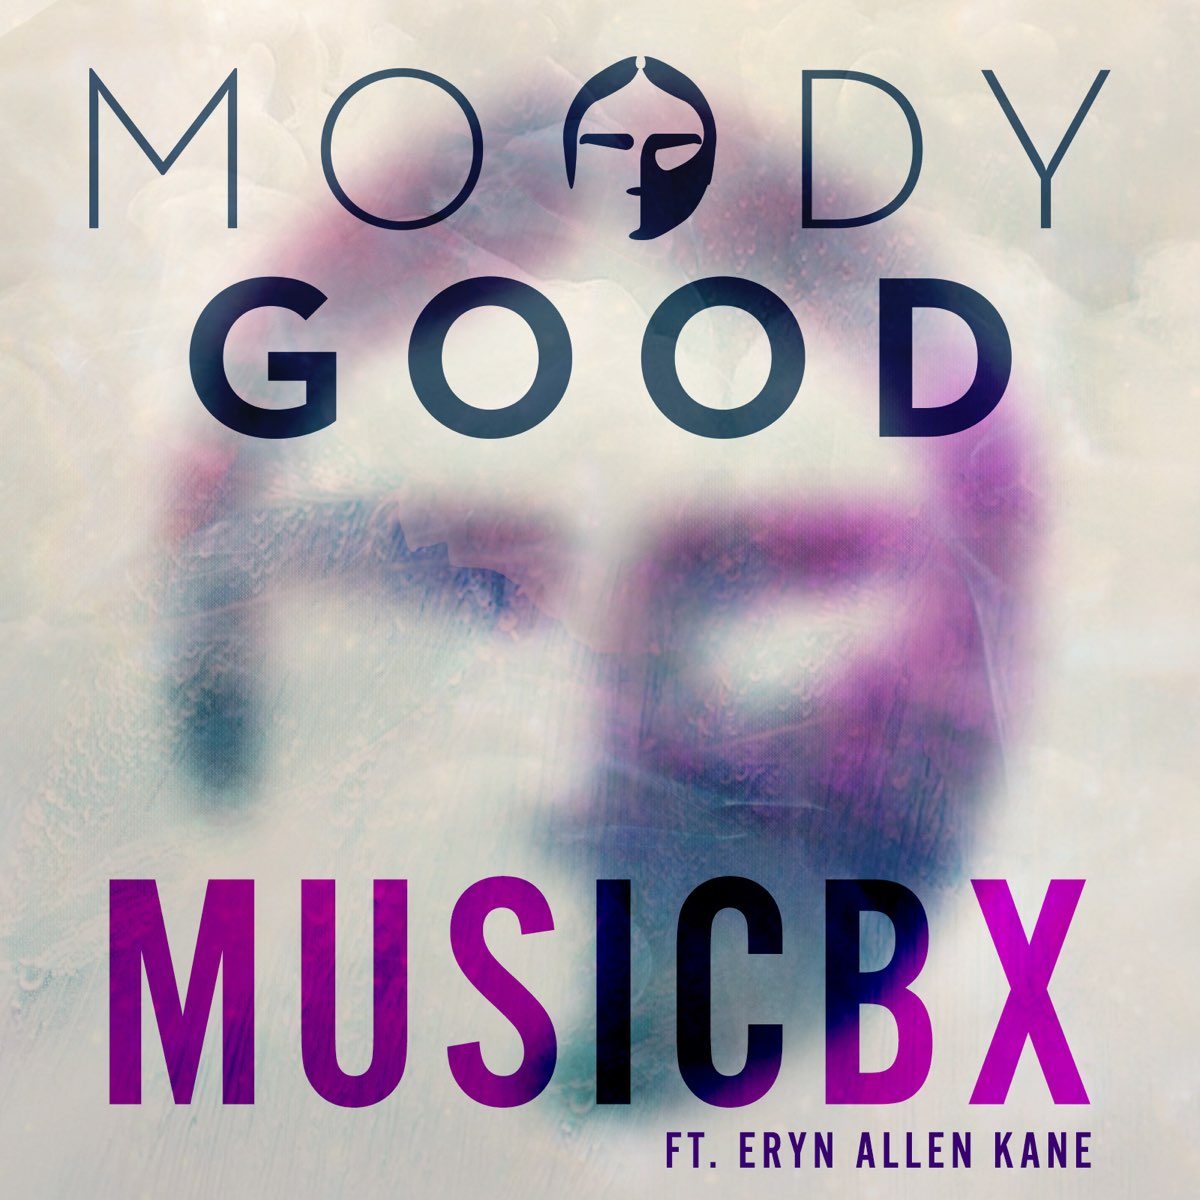 Good feat. Moody good. Goody Moody.